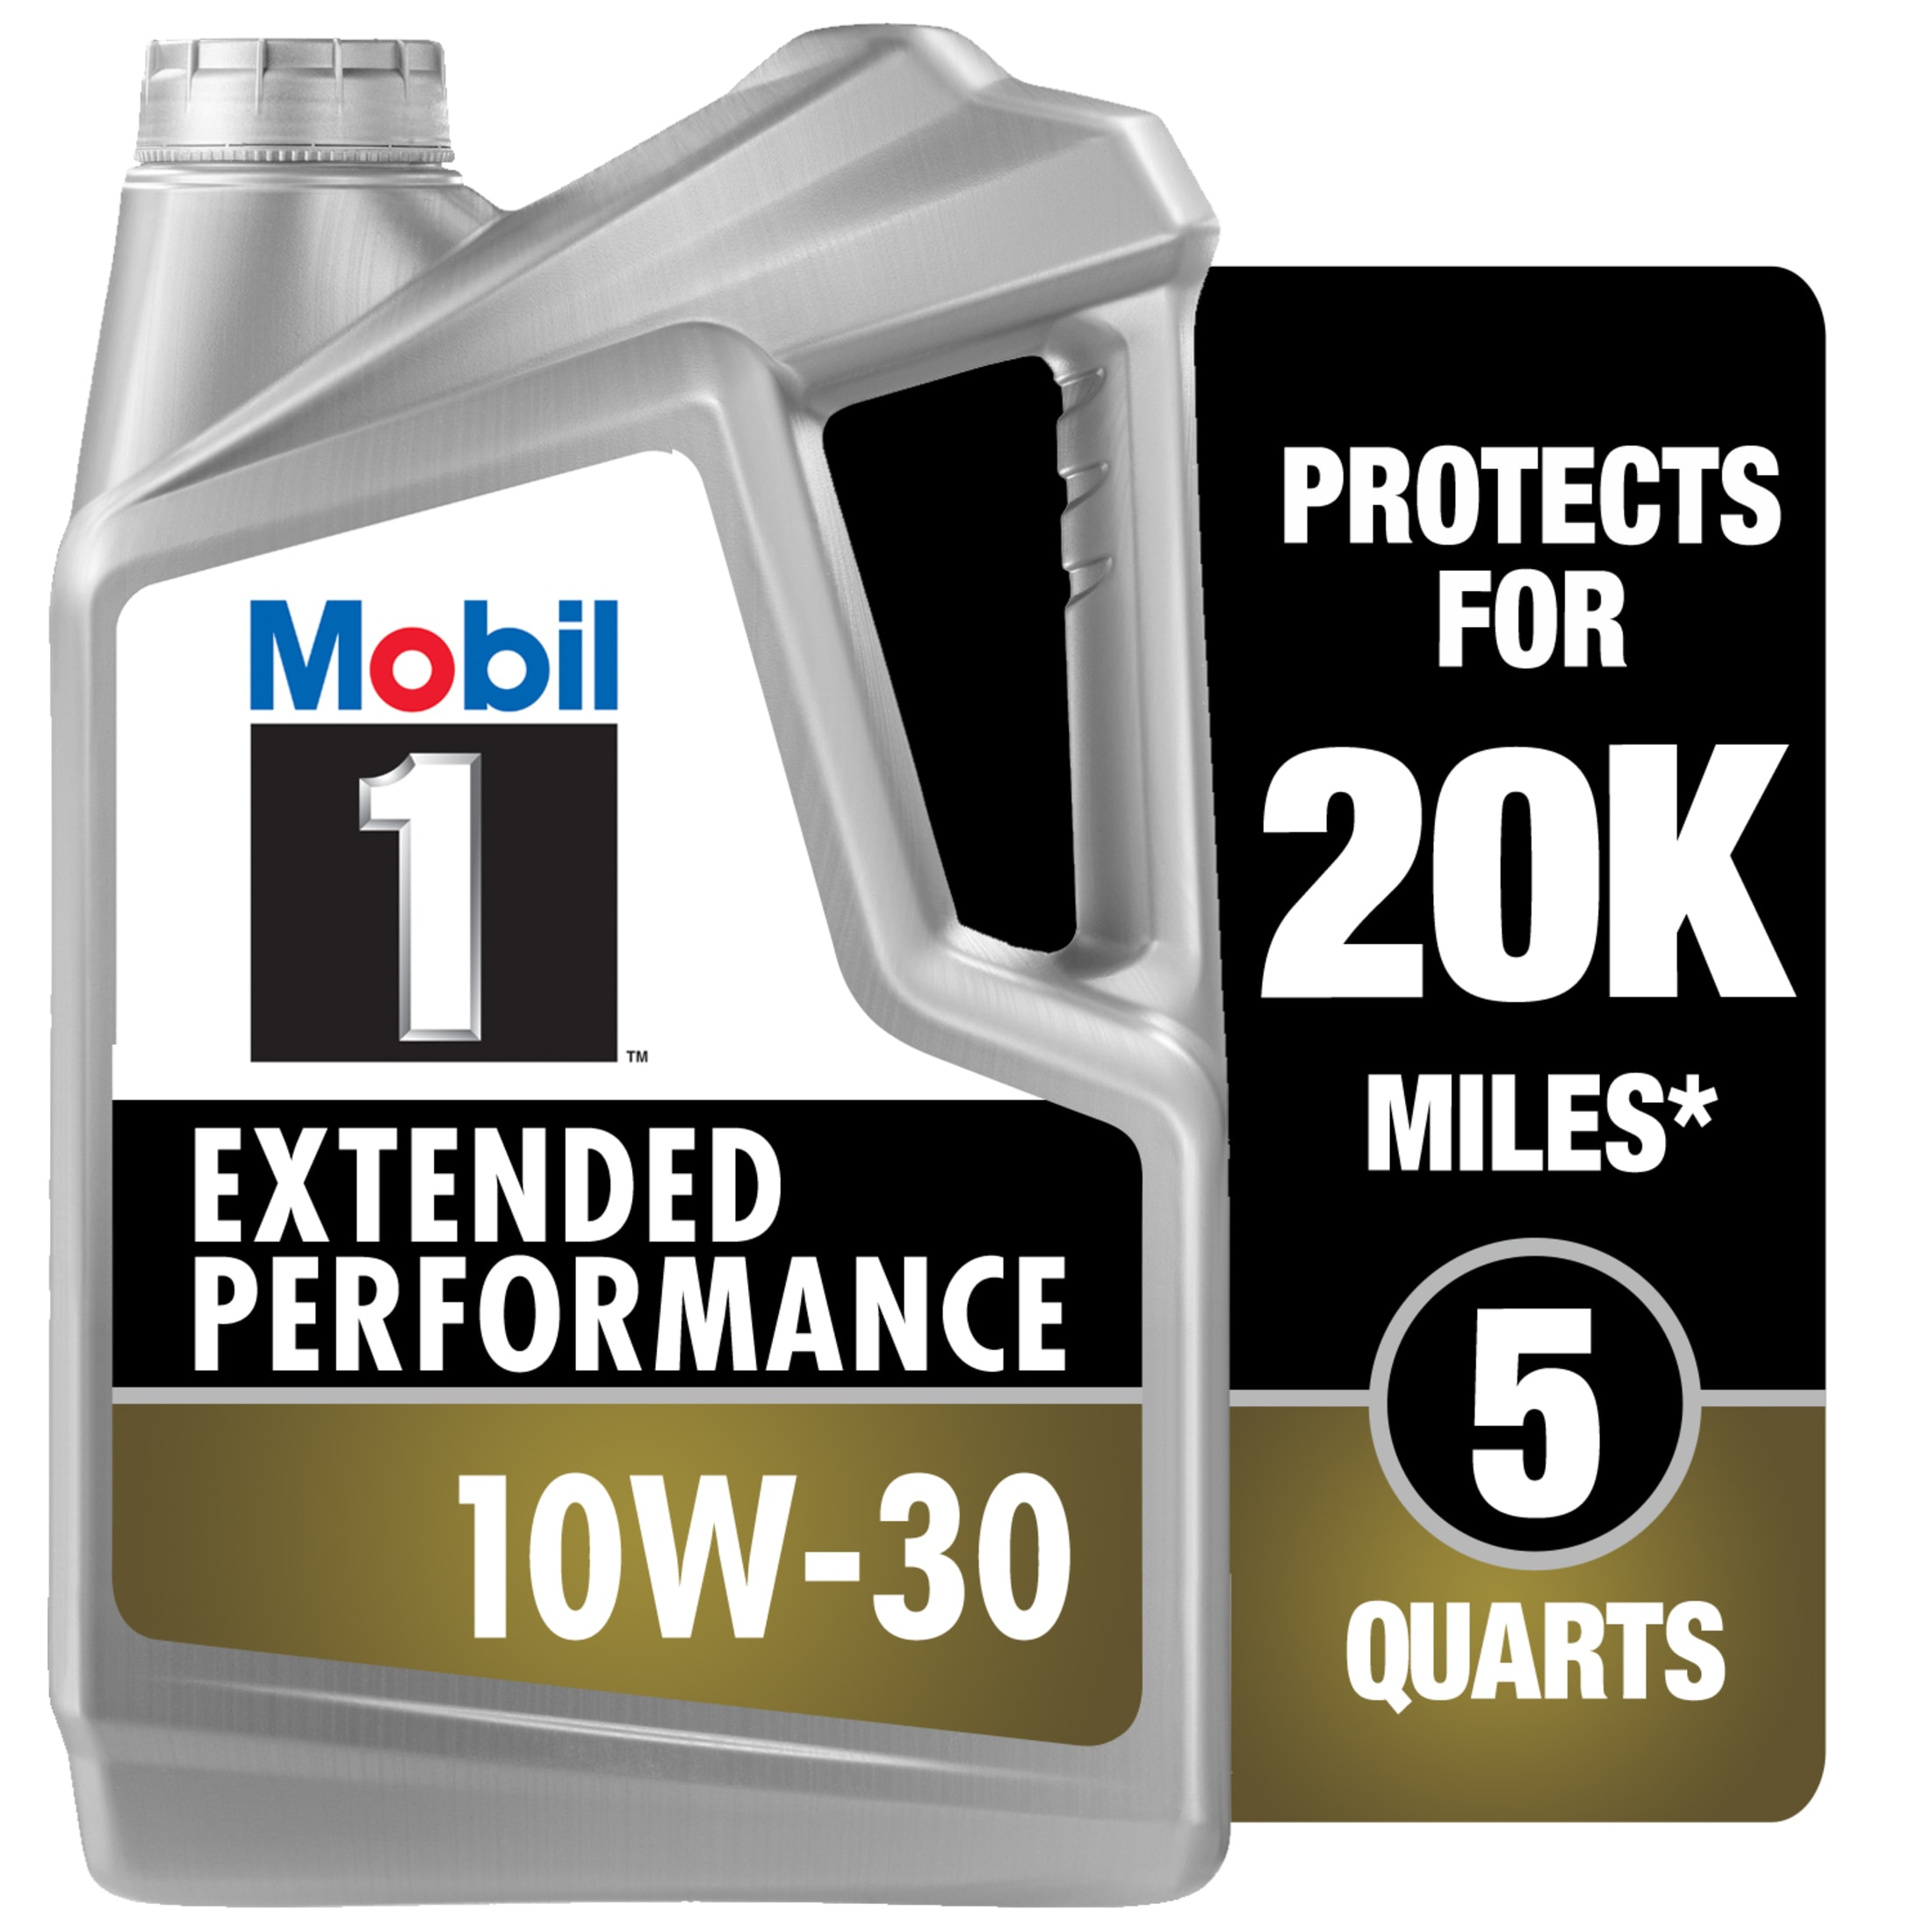 Mobil 1 Extended Performance Full Synthetic Motor Oil 10W-30, 5 Quart - image 2 of 8